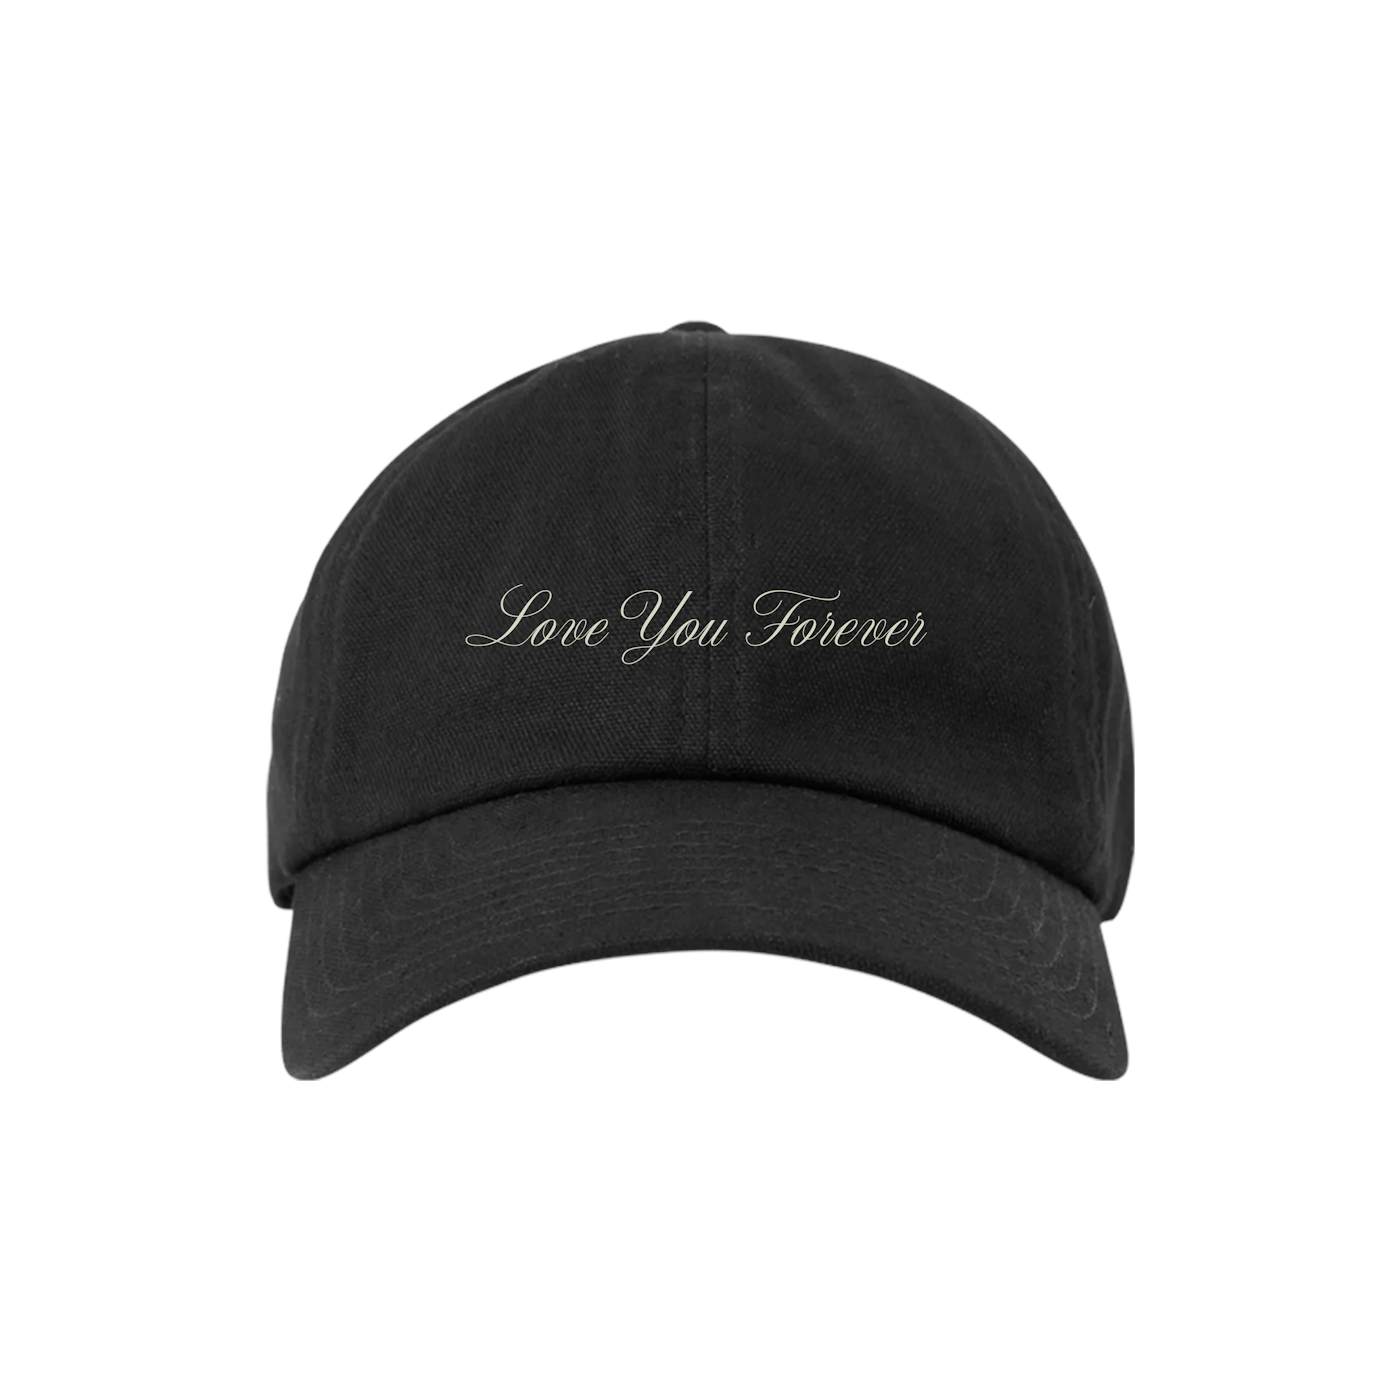 VÉRITÉ love you forever hat